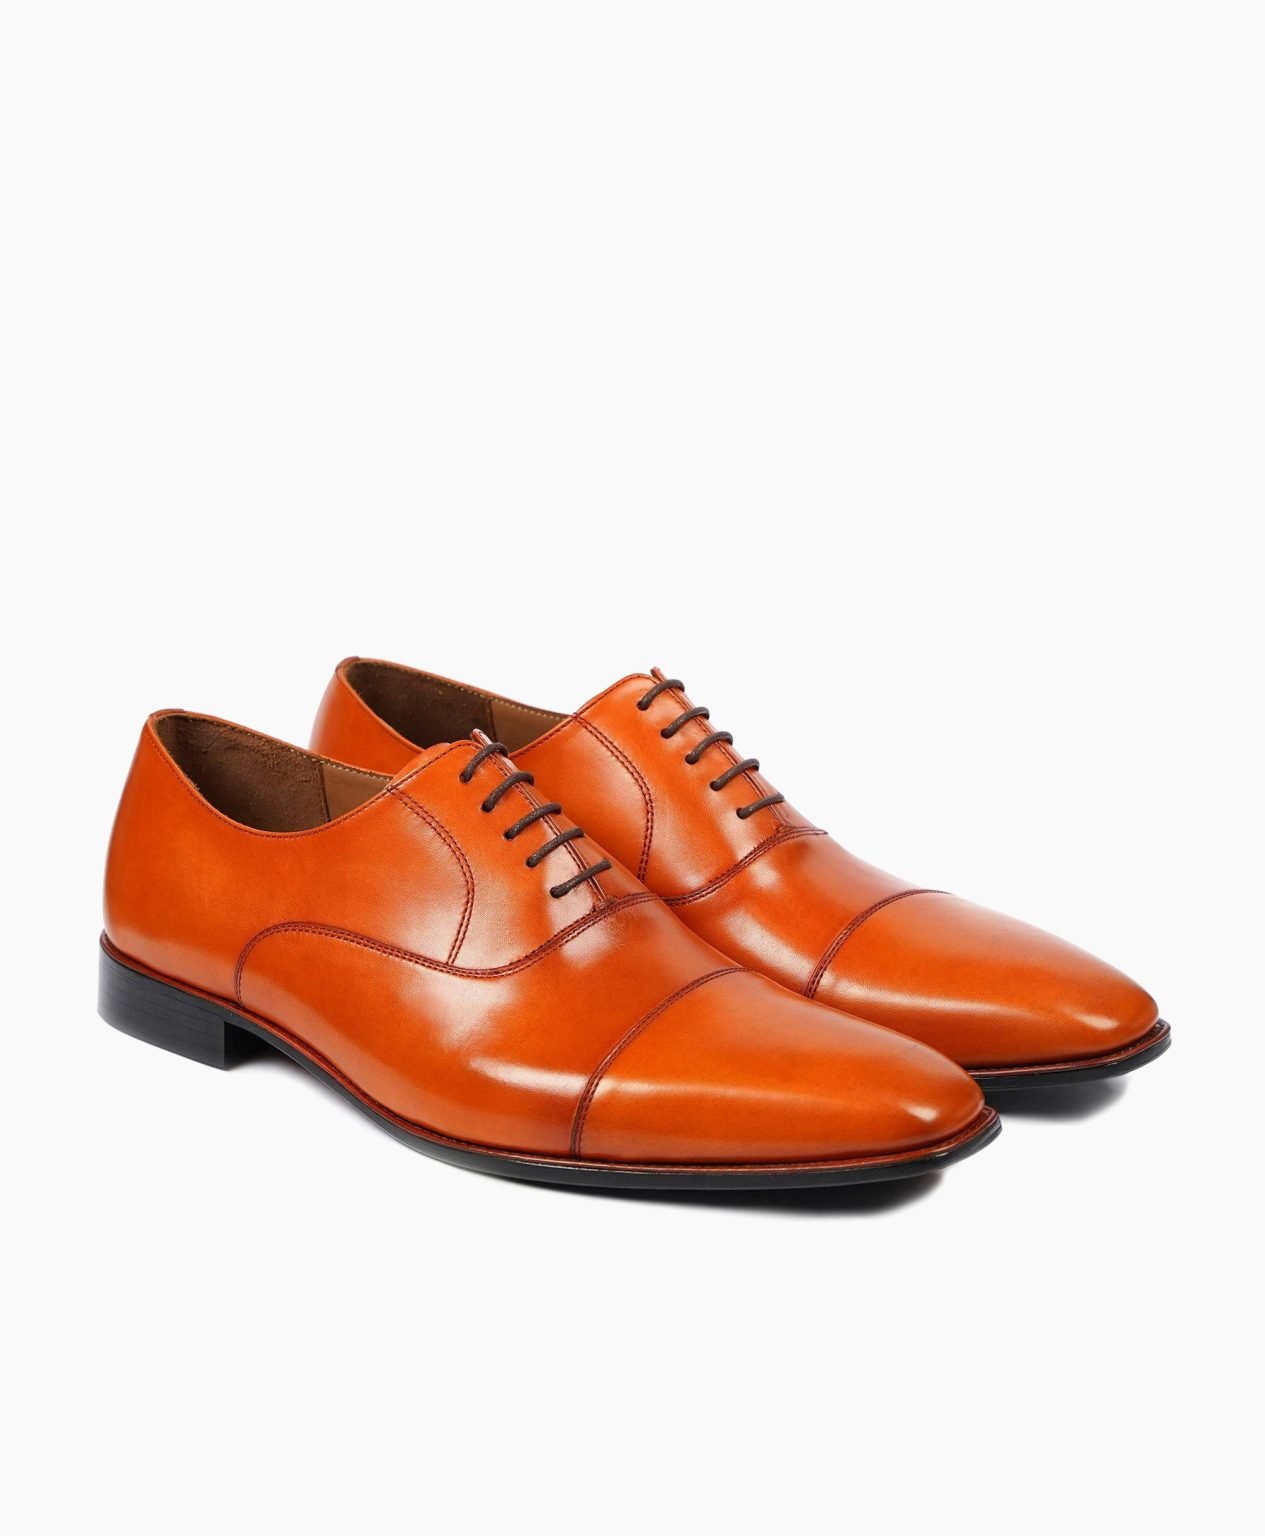 helston-oxford-orange-tan-leather-shoes-image200